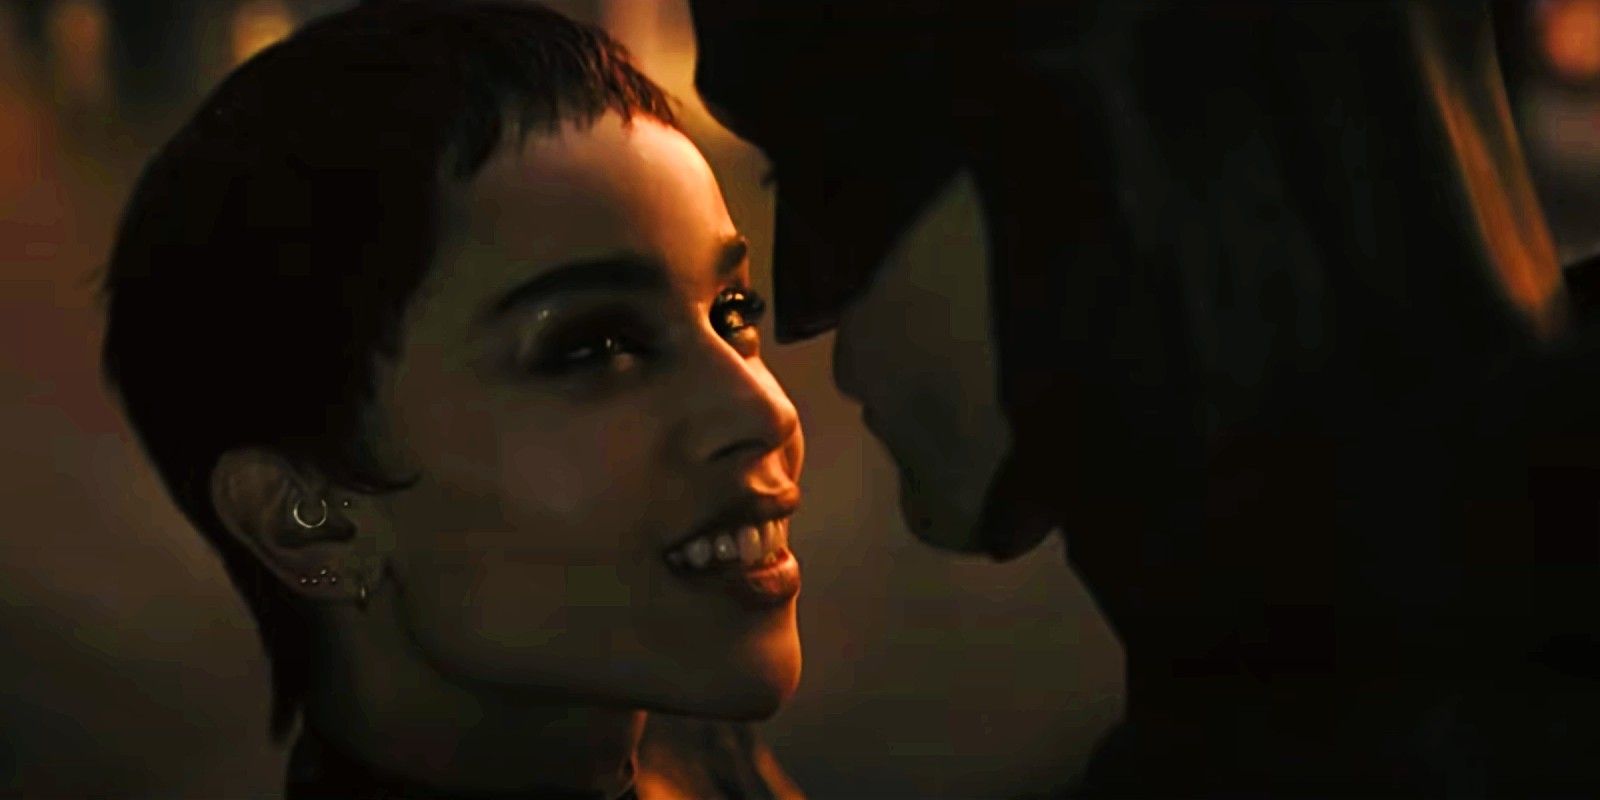 Zoe Kravitz and Robert Pattinson in The Batman